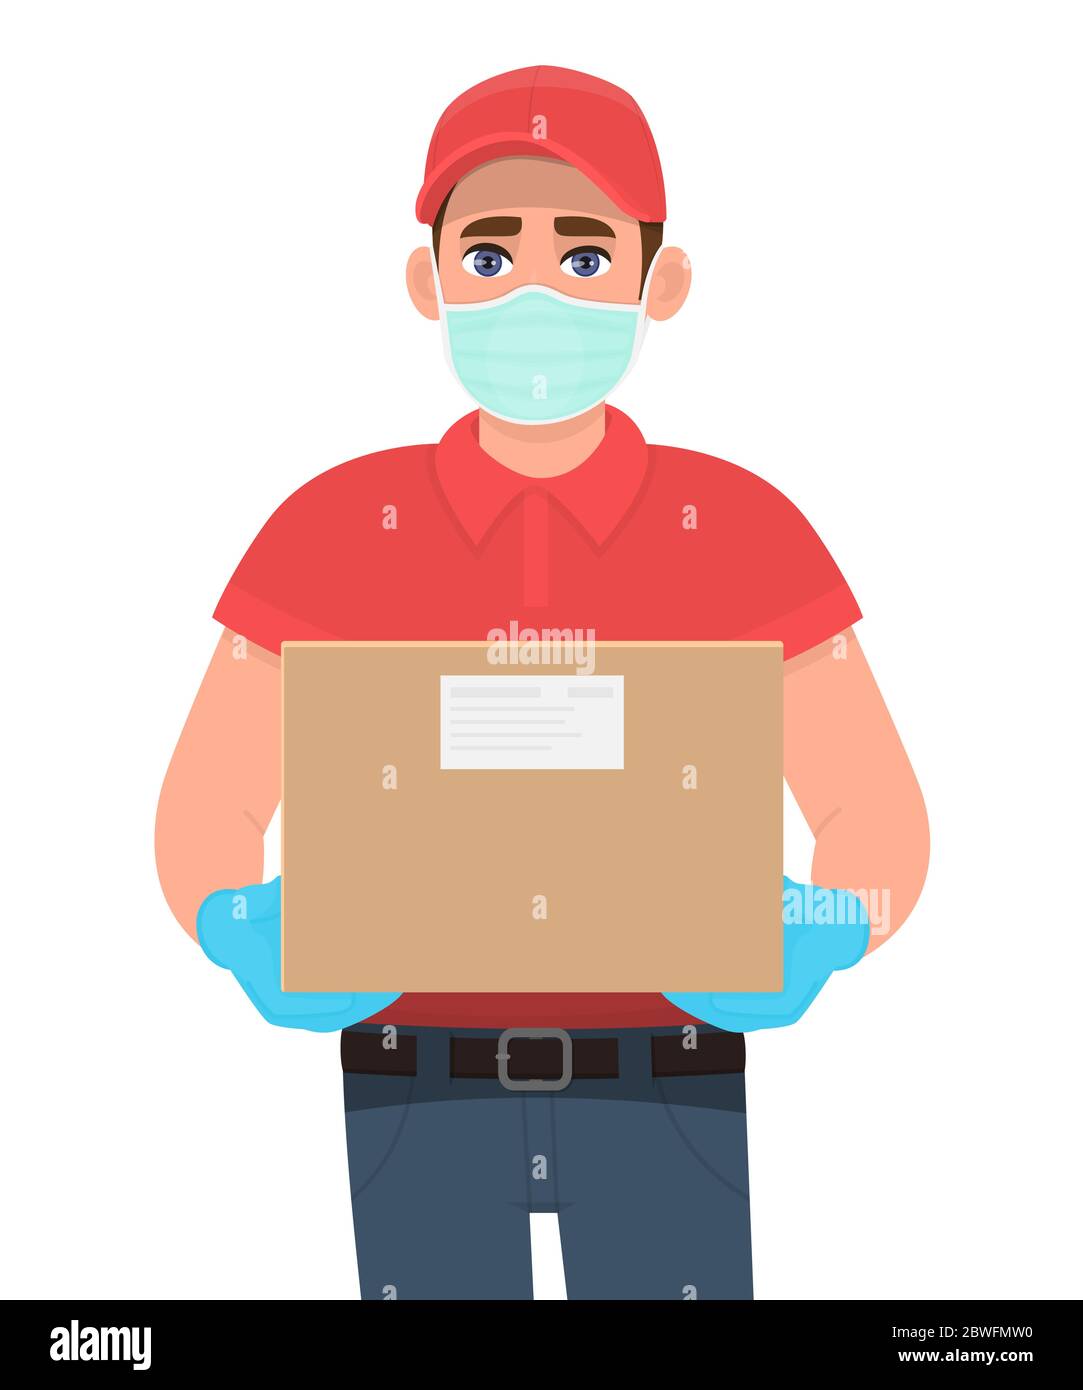 Courier Delivery Man Medical Latex Gloves Mask Safely Delivers